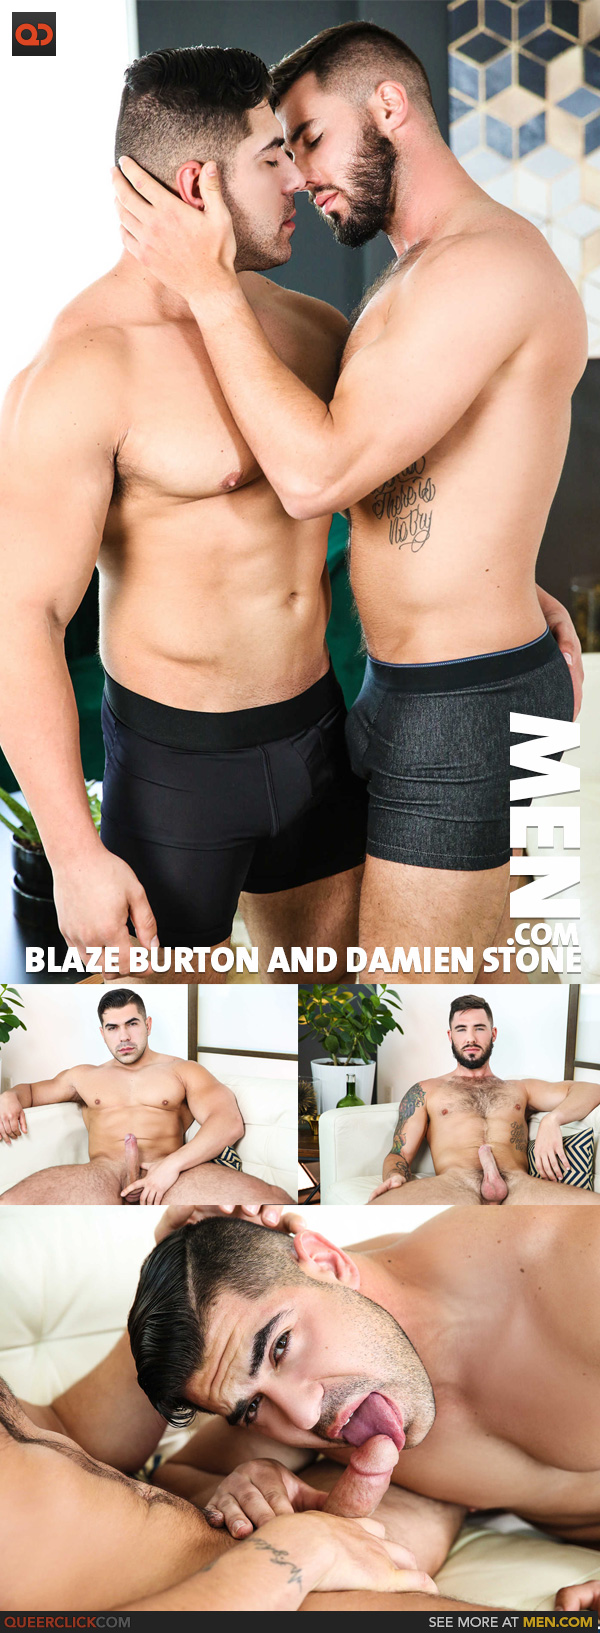 Men.com:  Blaze Burton and Damien Stone